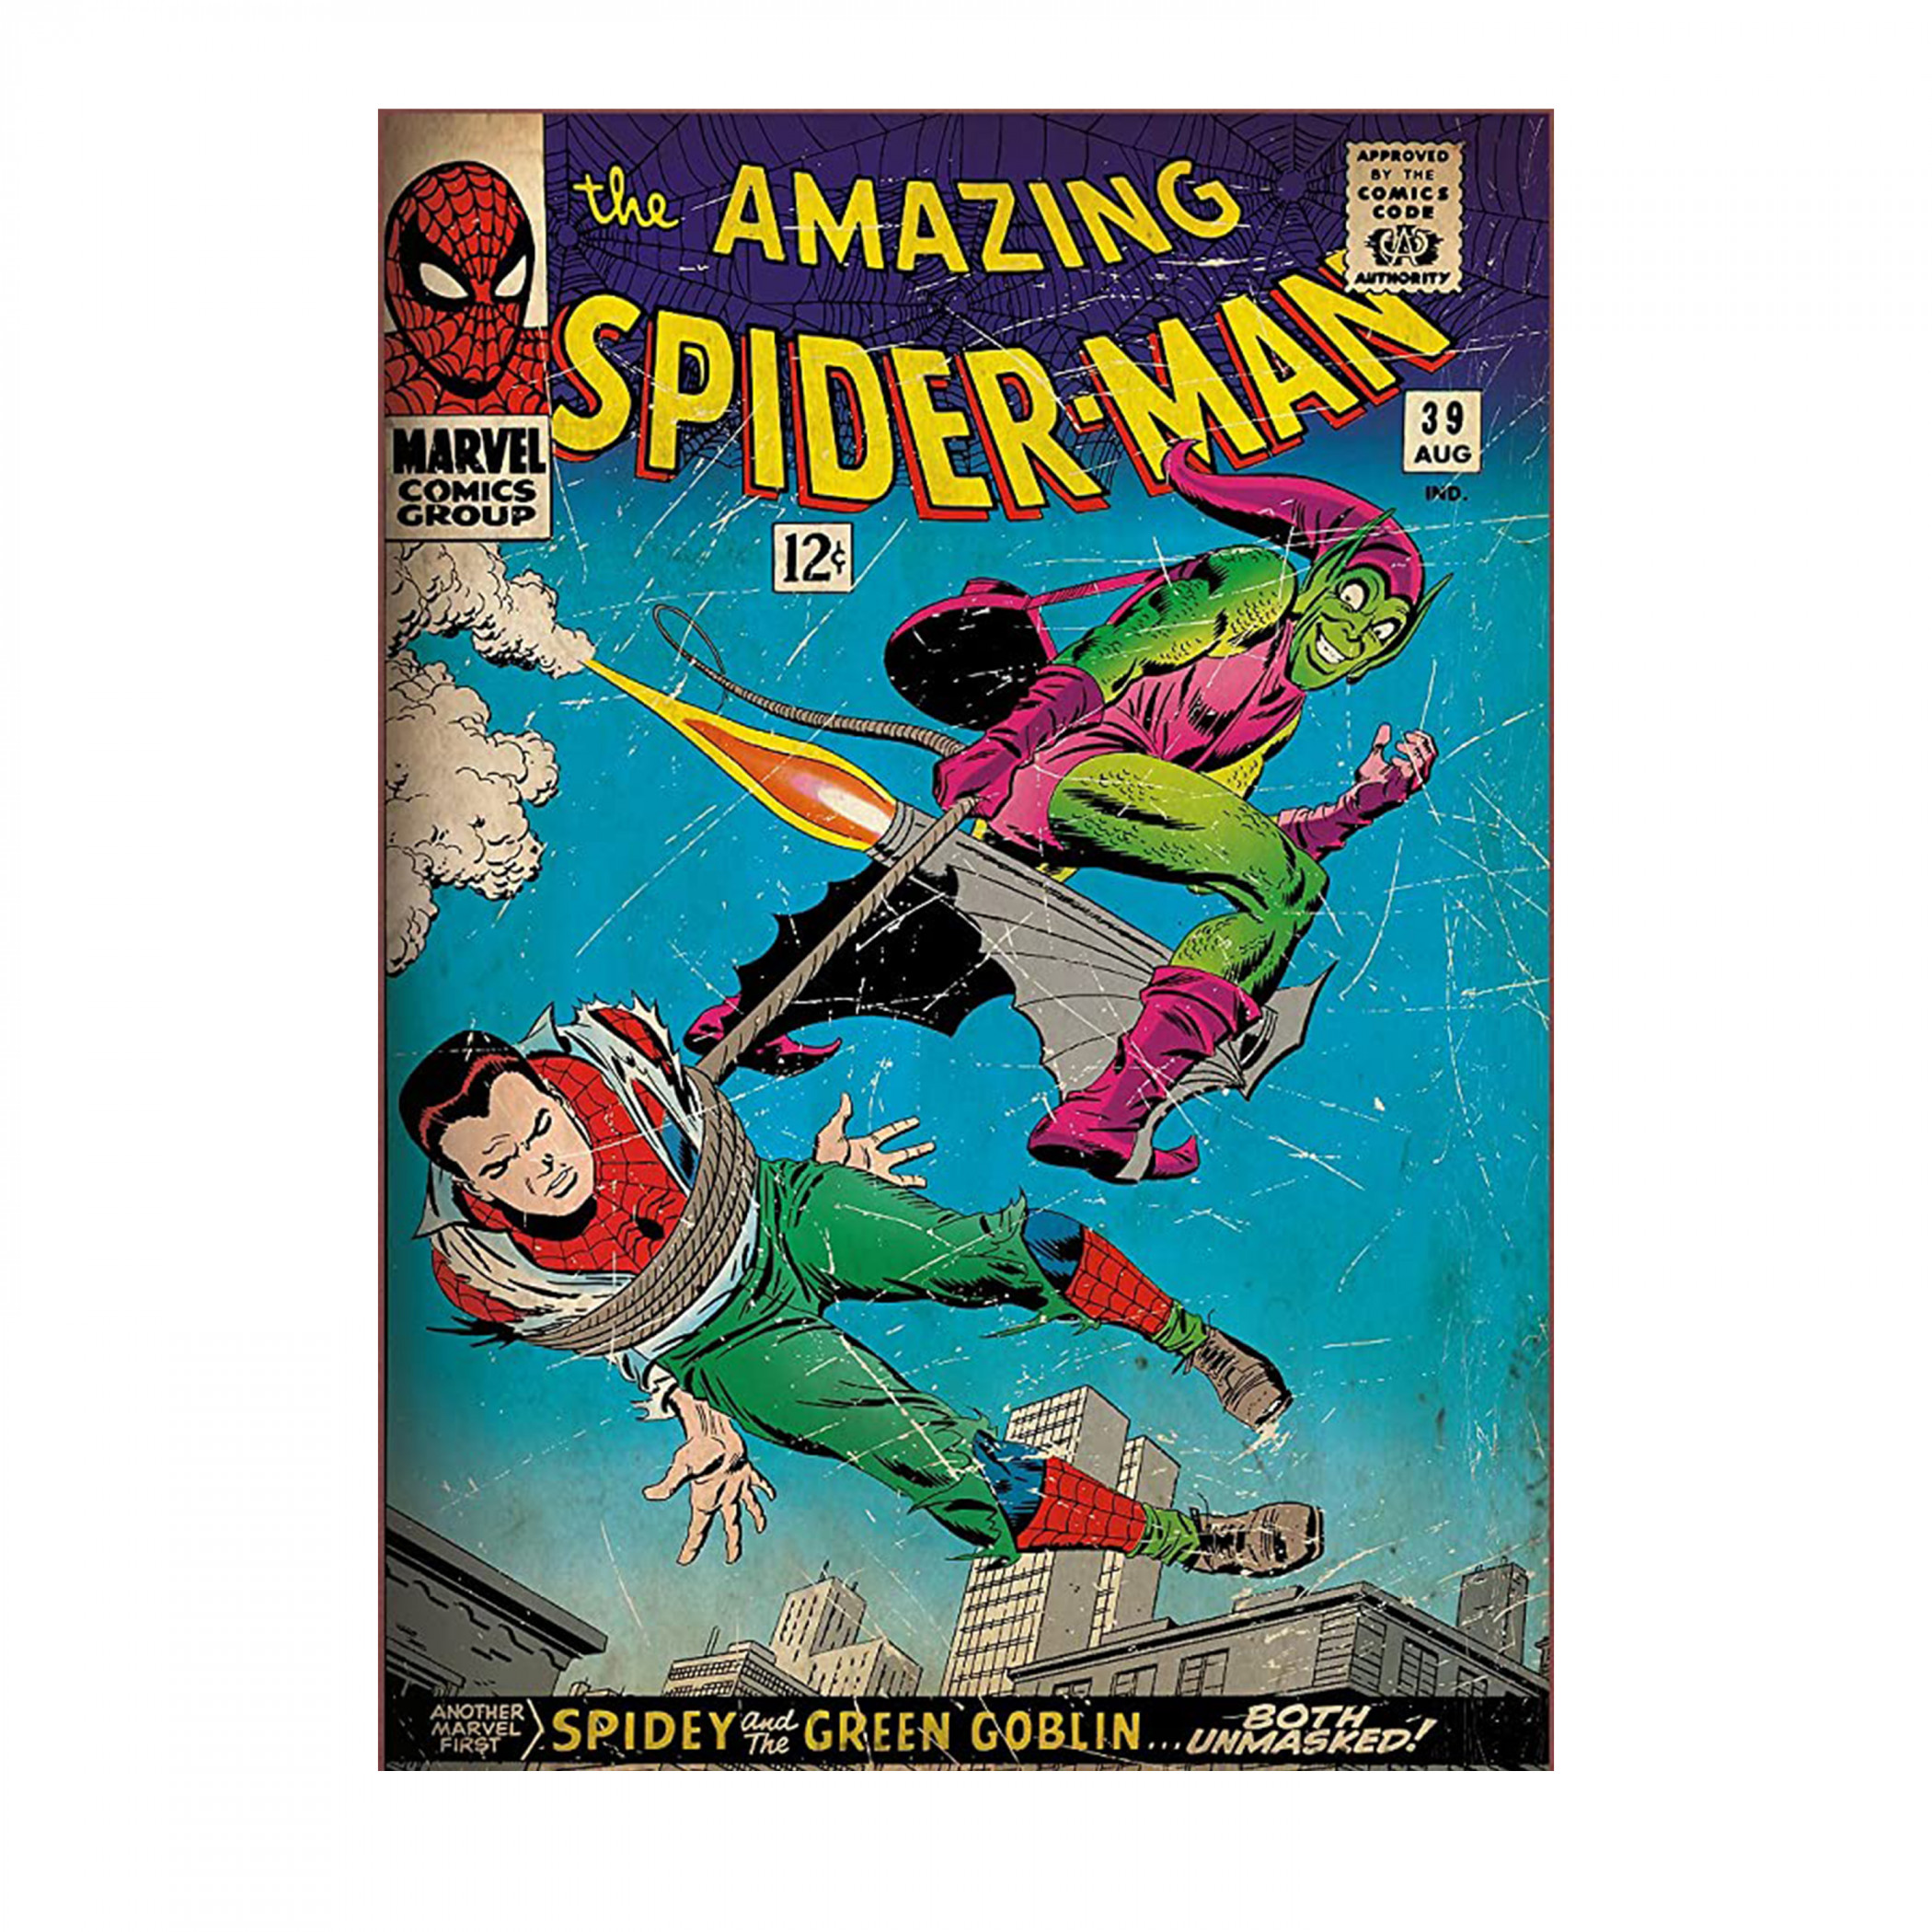 Spiderman #39 Cover Fathead Vinyl Wall Decals